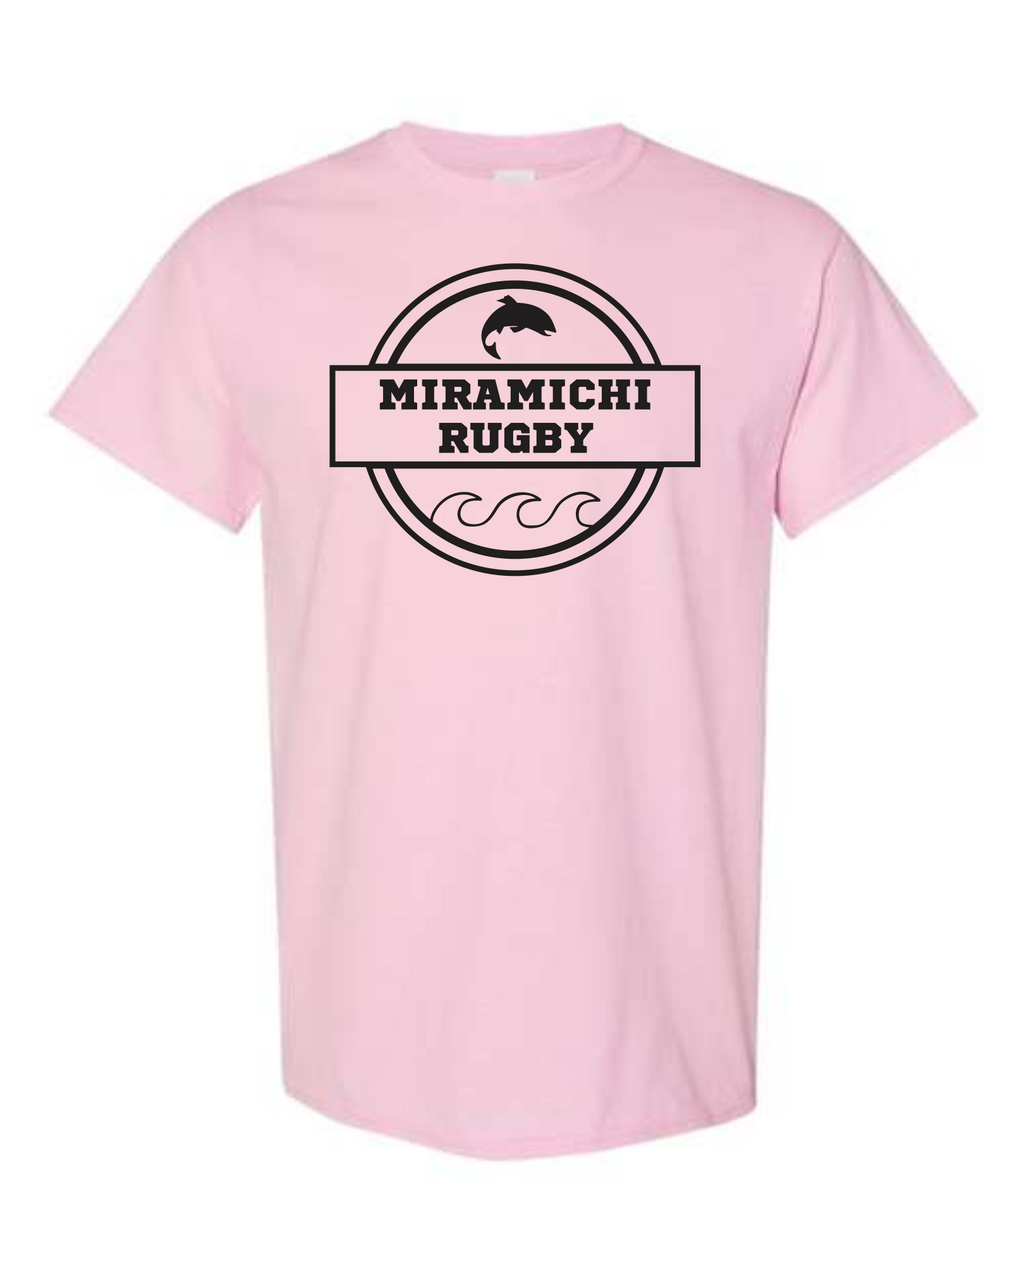 Miramichi Rugby - Pink - Unisex Cotton T-Shirt